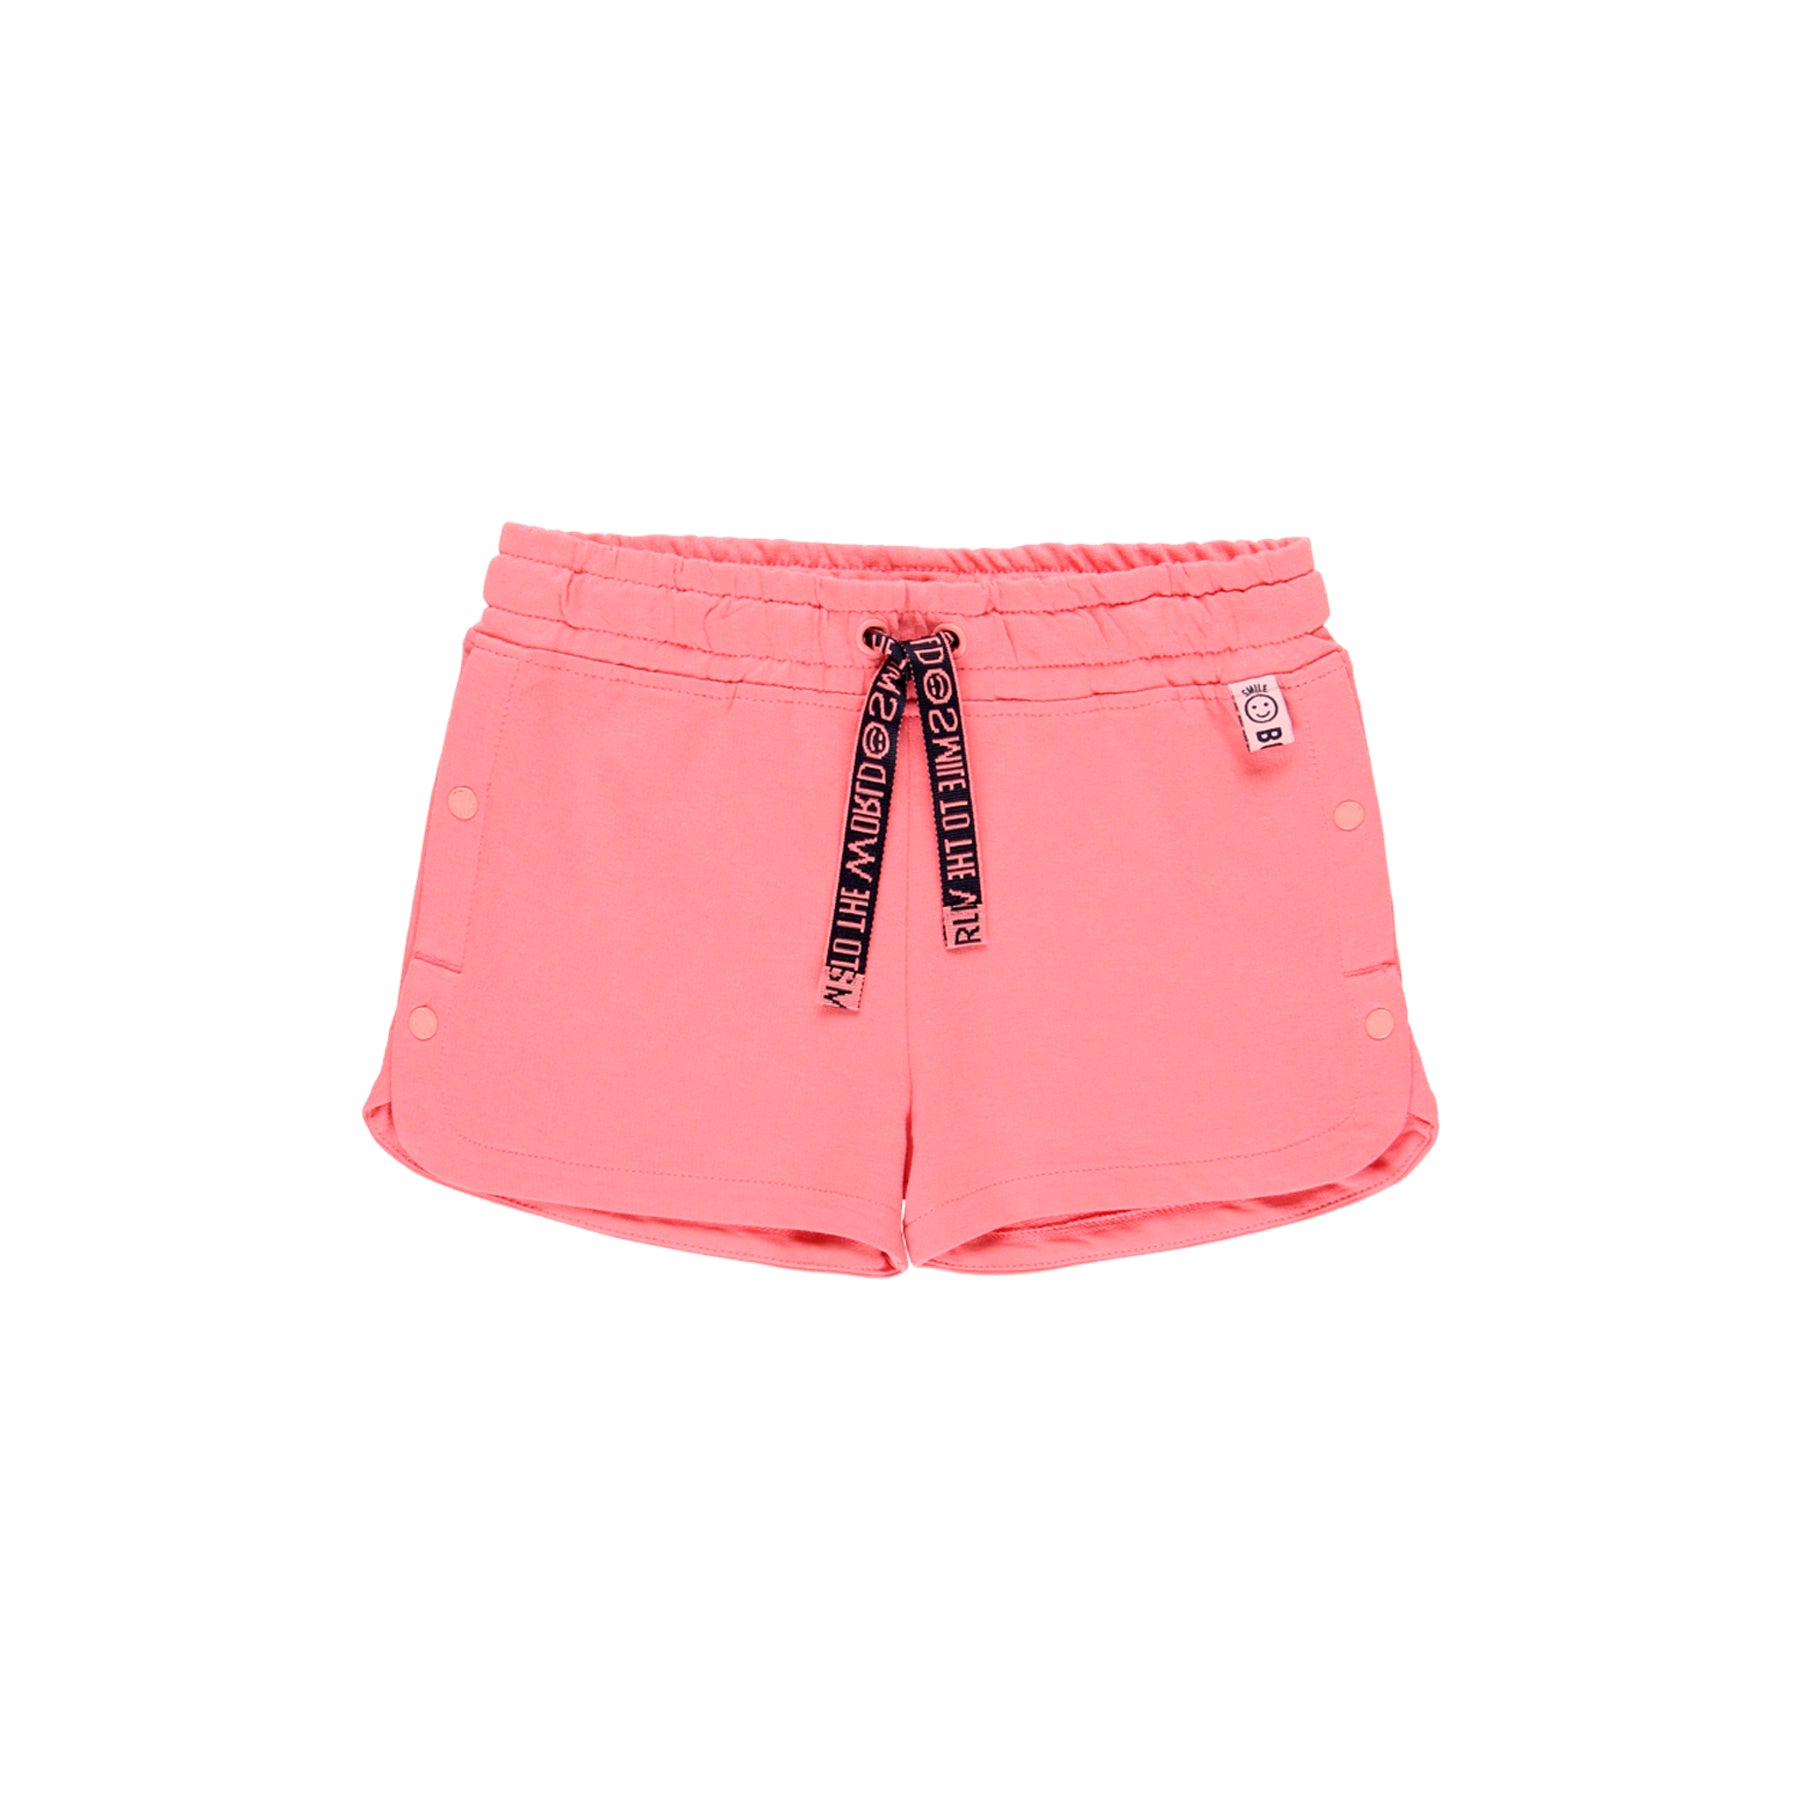 Boboli coral jersey shorts